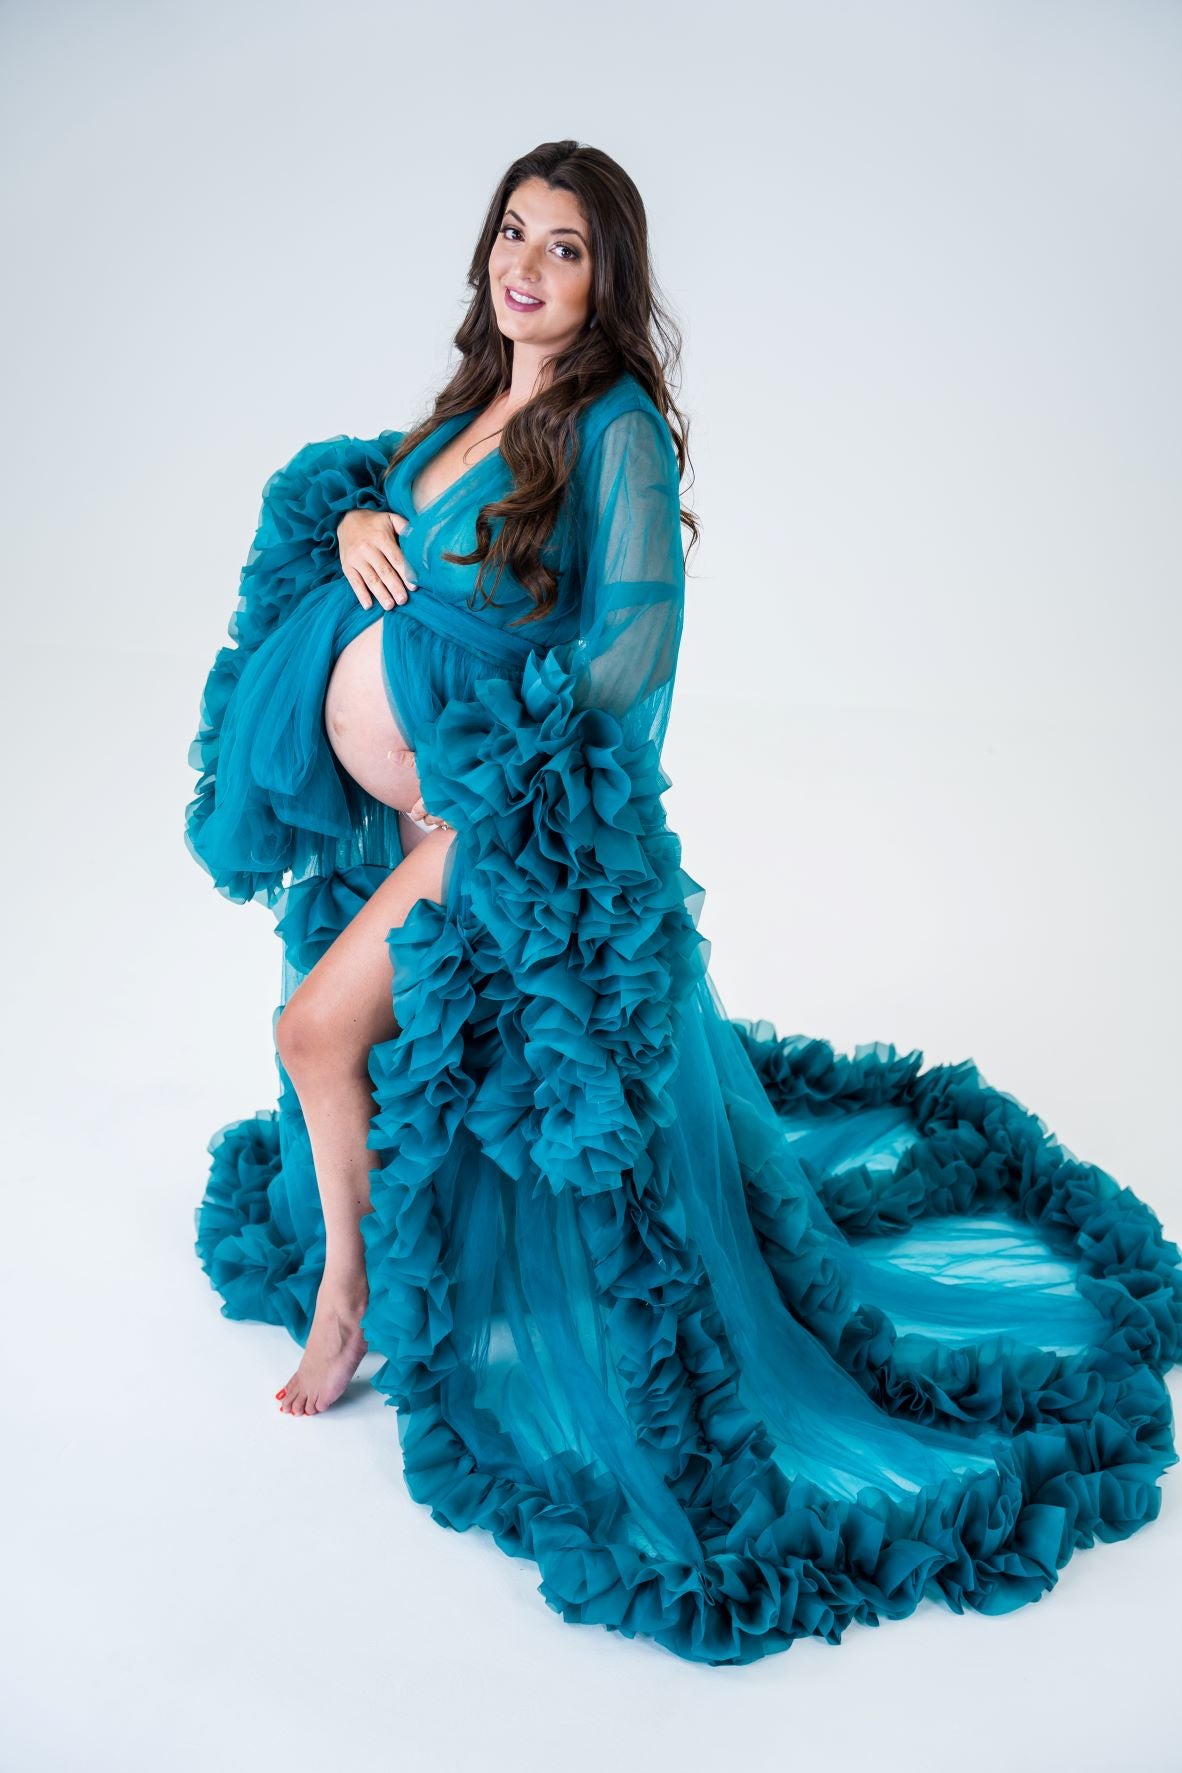 Teal maternity dresses australia